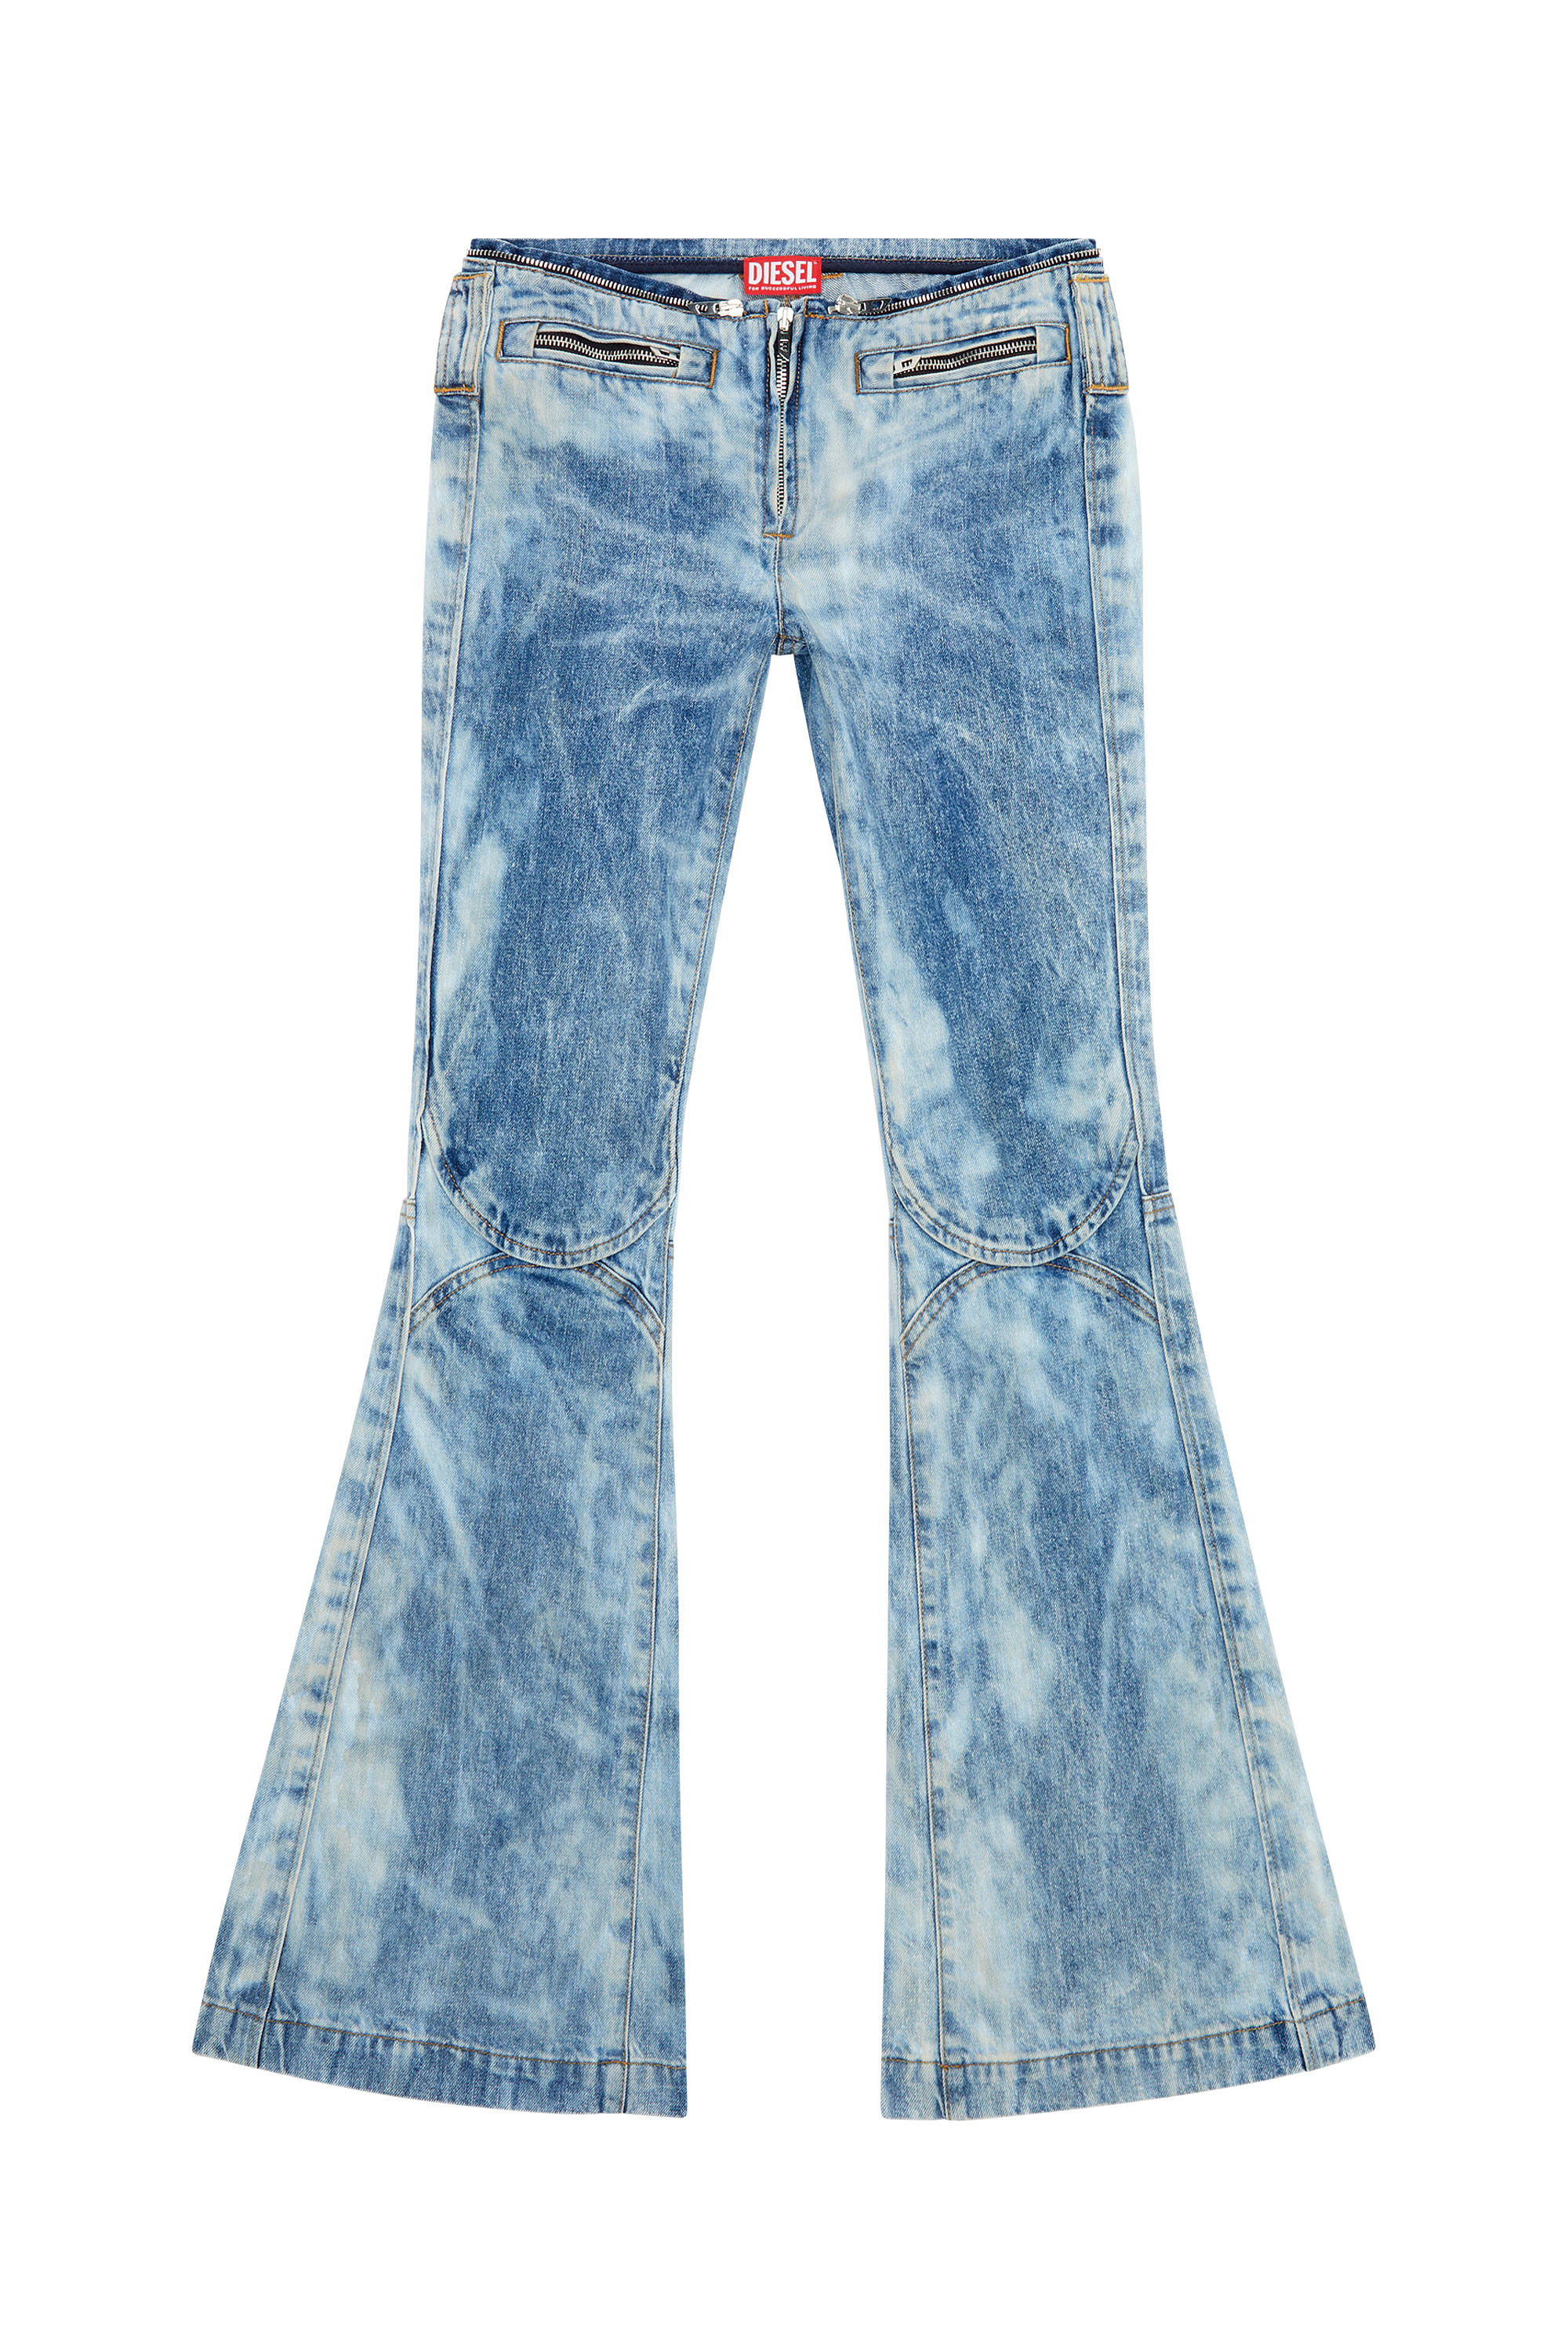 Diesel - Straight Jeans D-Gen 0PGAM, Mujer Straight Jeans - D-Gen in Azul marino - Image 5